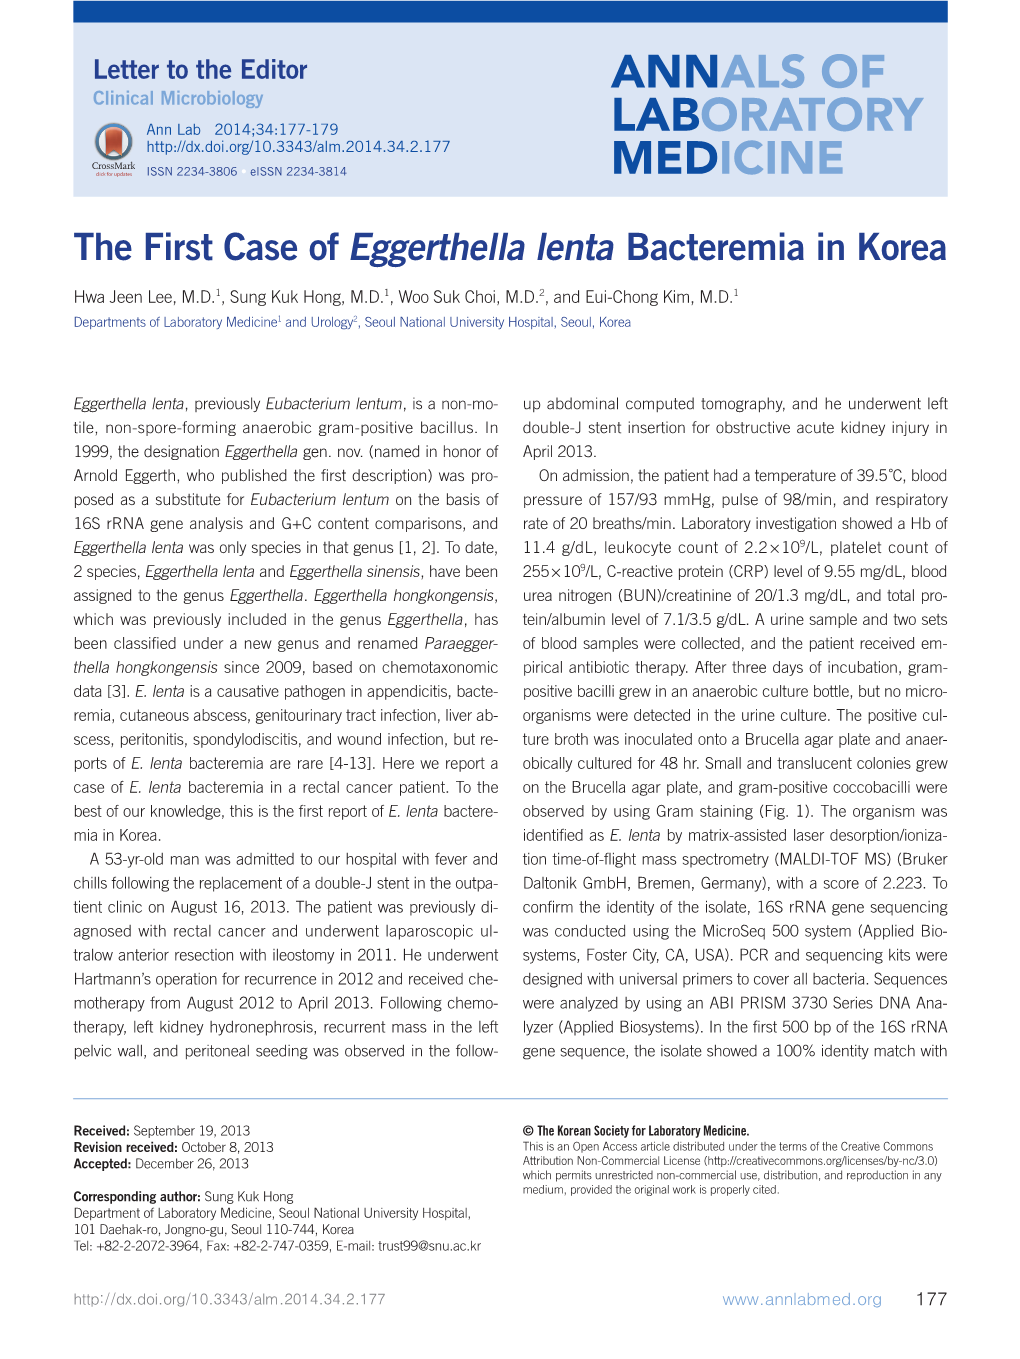 The First Case of Eggerthella Lenta Bacteremia in Korea